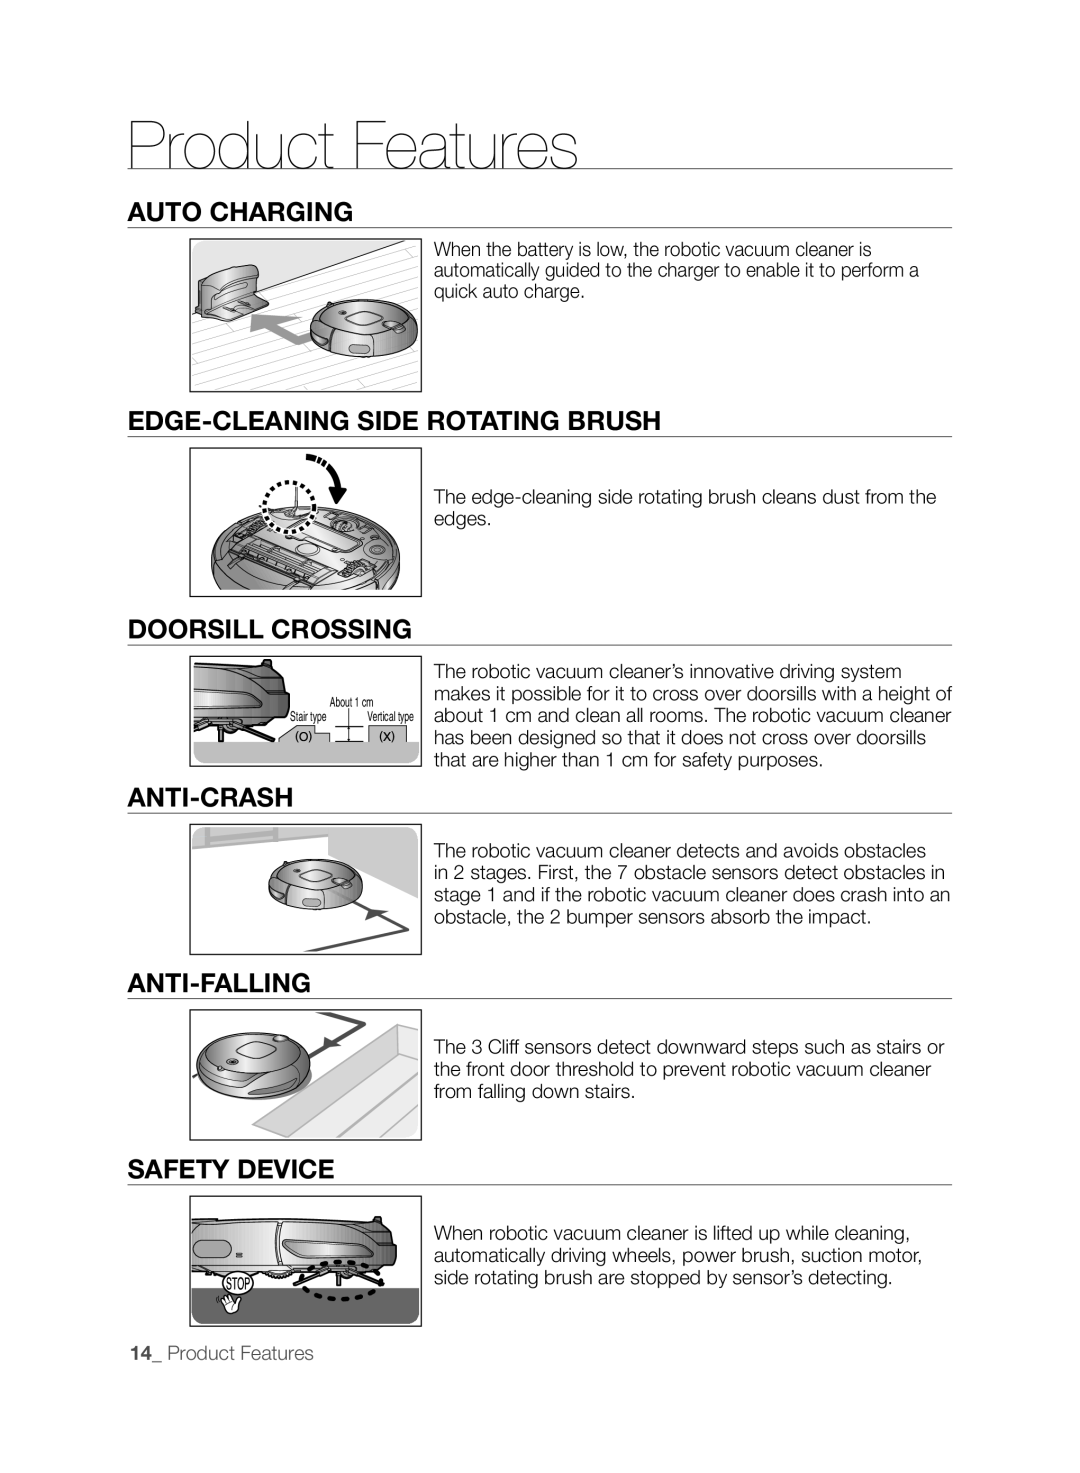 Samsung DJ68-00518A, SR8830 Auto Charging, Edge-CleaningSide ROTATING Brush, Doorsill Crossing, Anti-Crash, Anti-Falling 